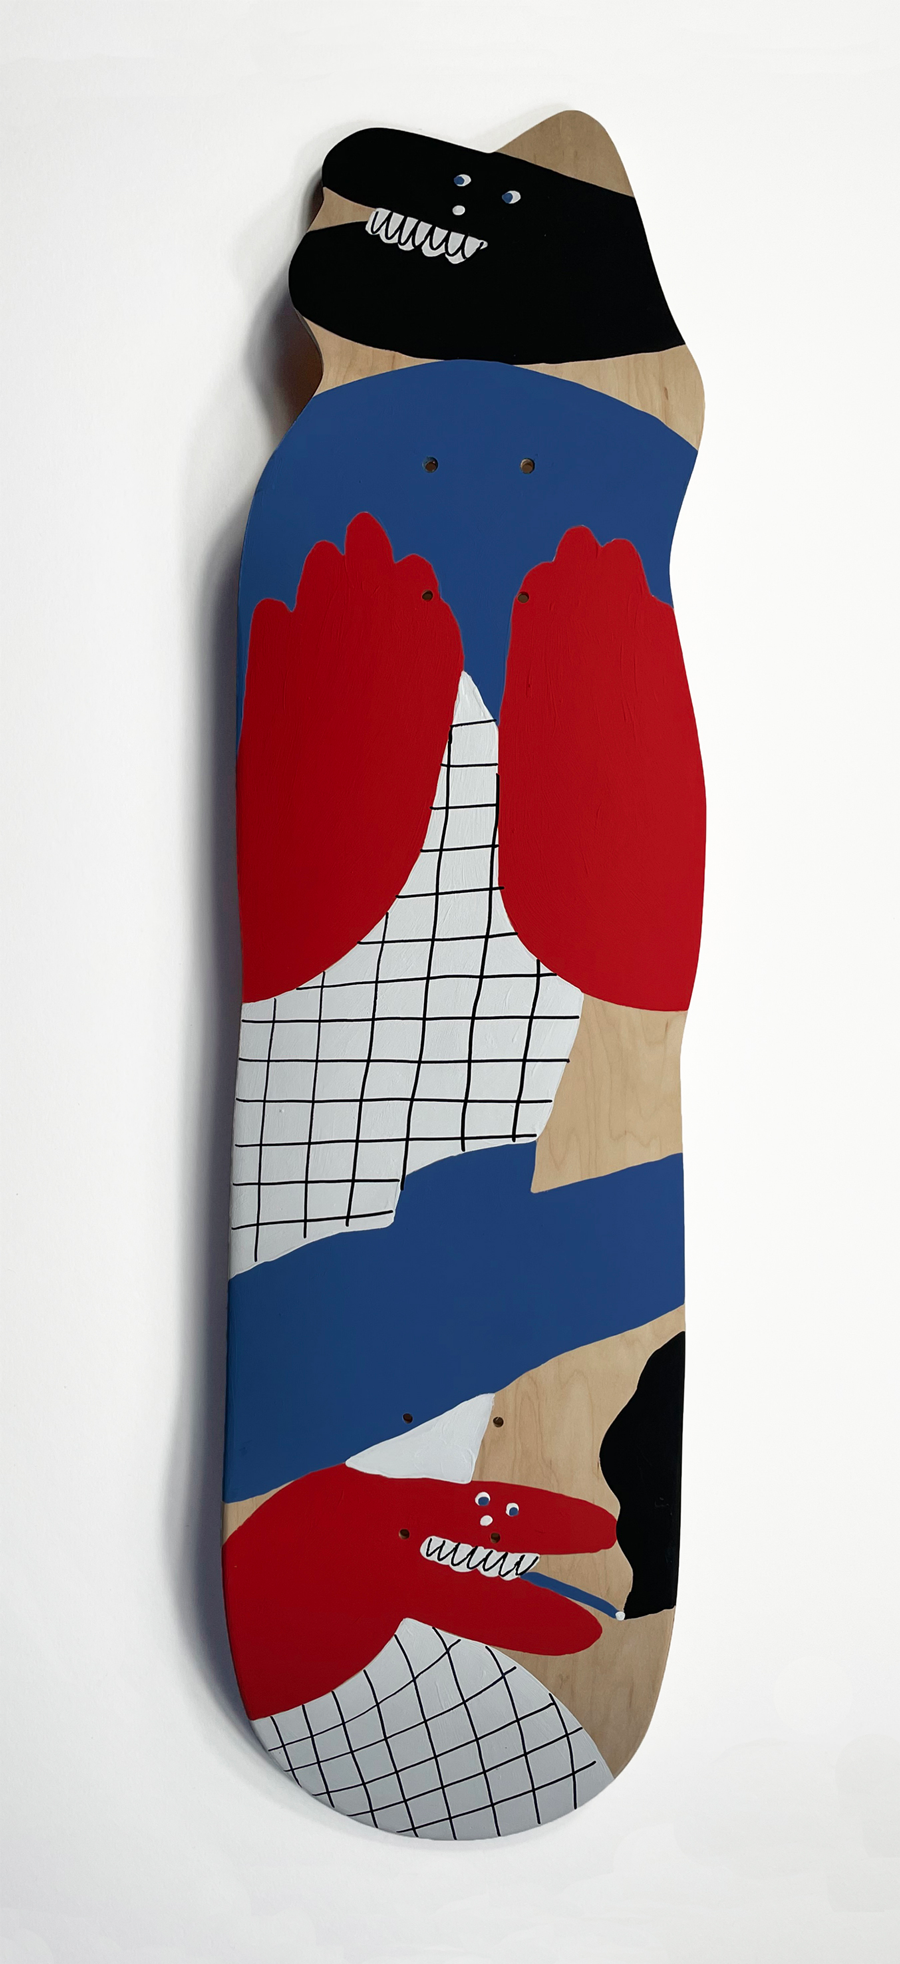 Lucas Beaufort, Barabarus 12 of 21, acrylic on skateboard, 80x22x1 cm